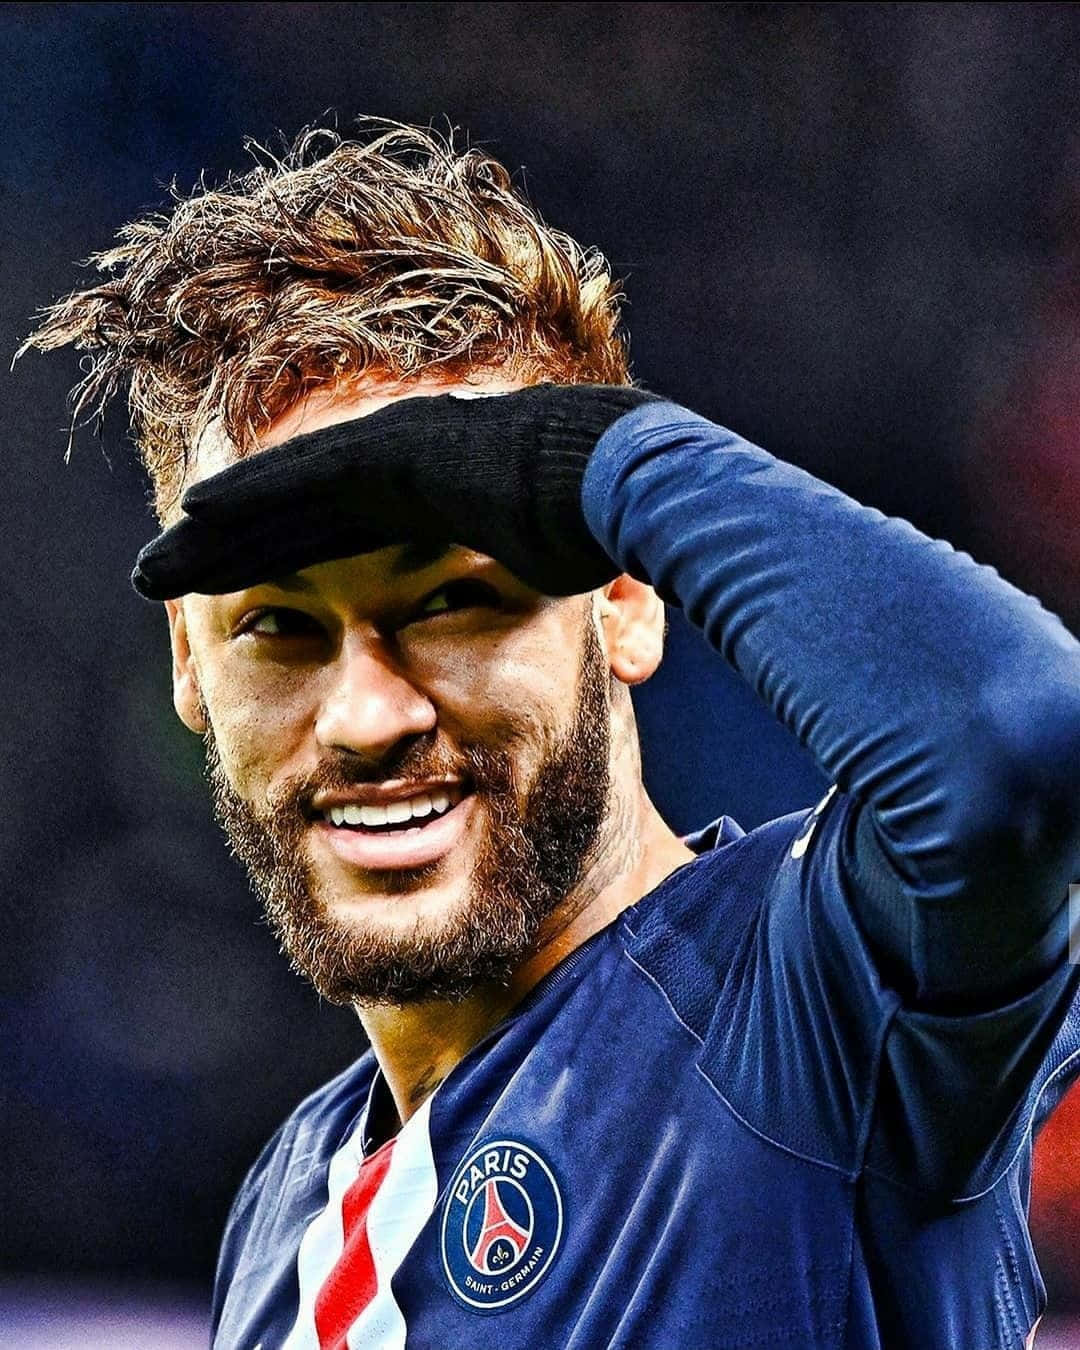 Neymar Smiling With Beard P S G Jersey Wallpaper